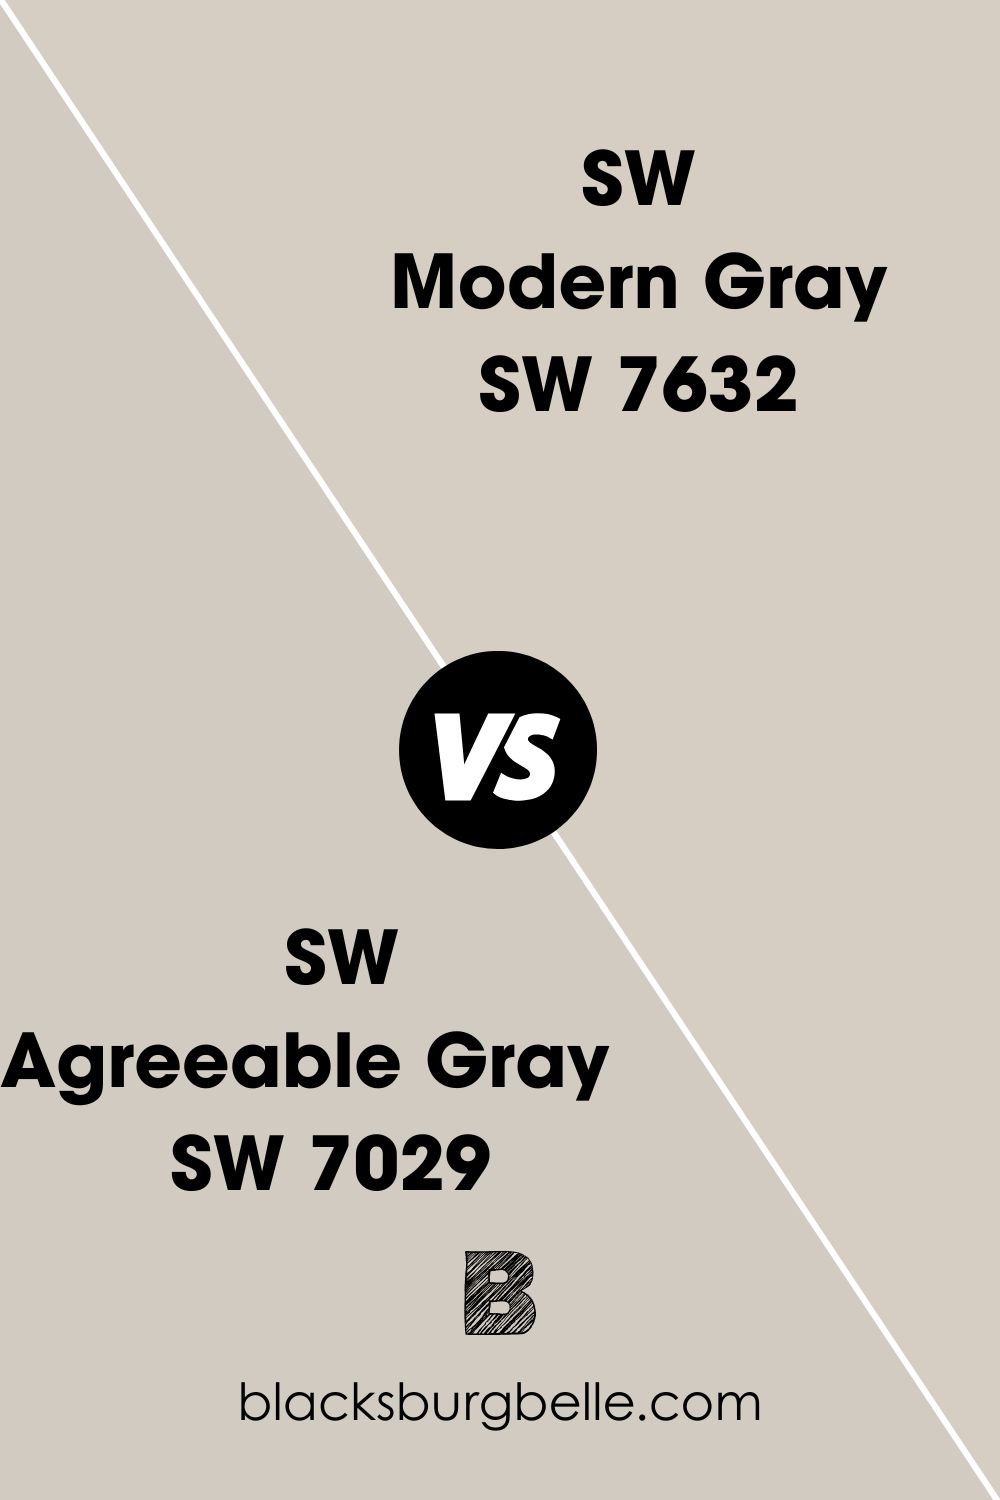 SW Modern Gray vs SW Agreeable Gray